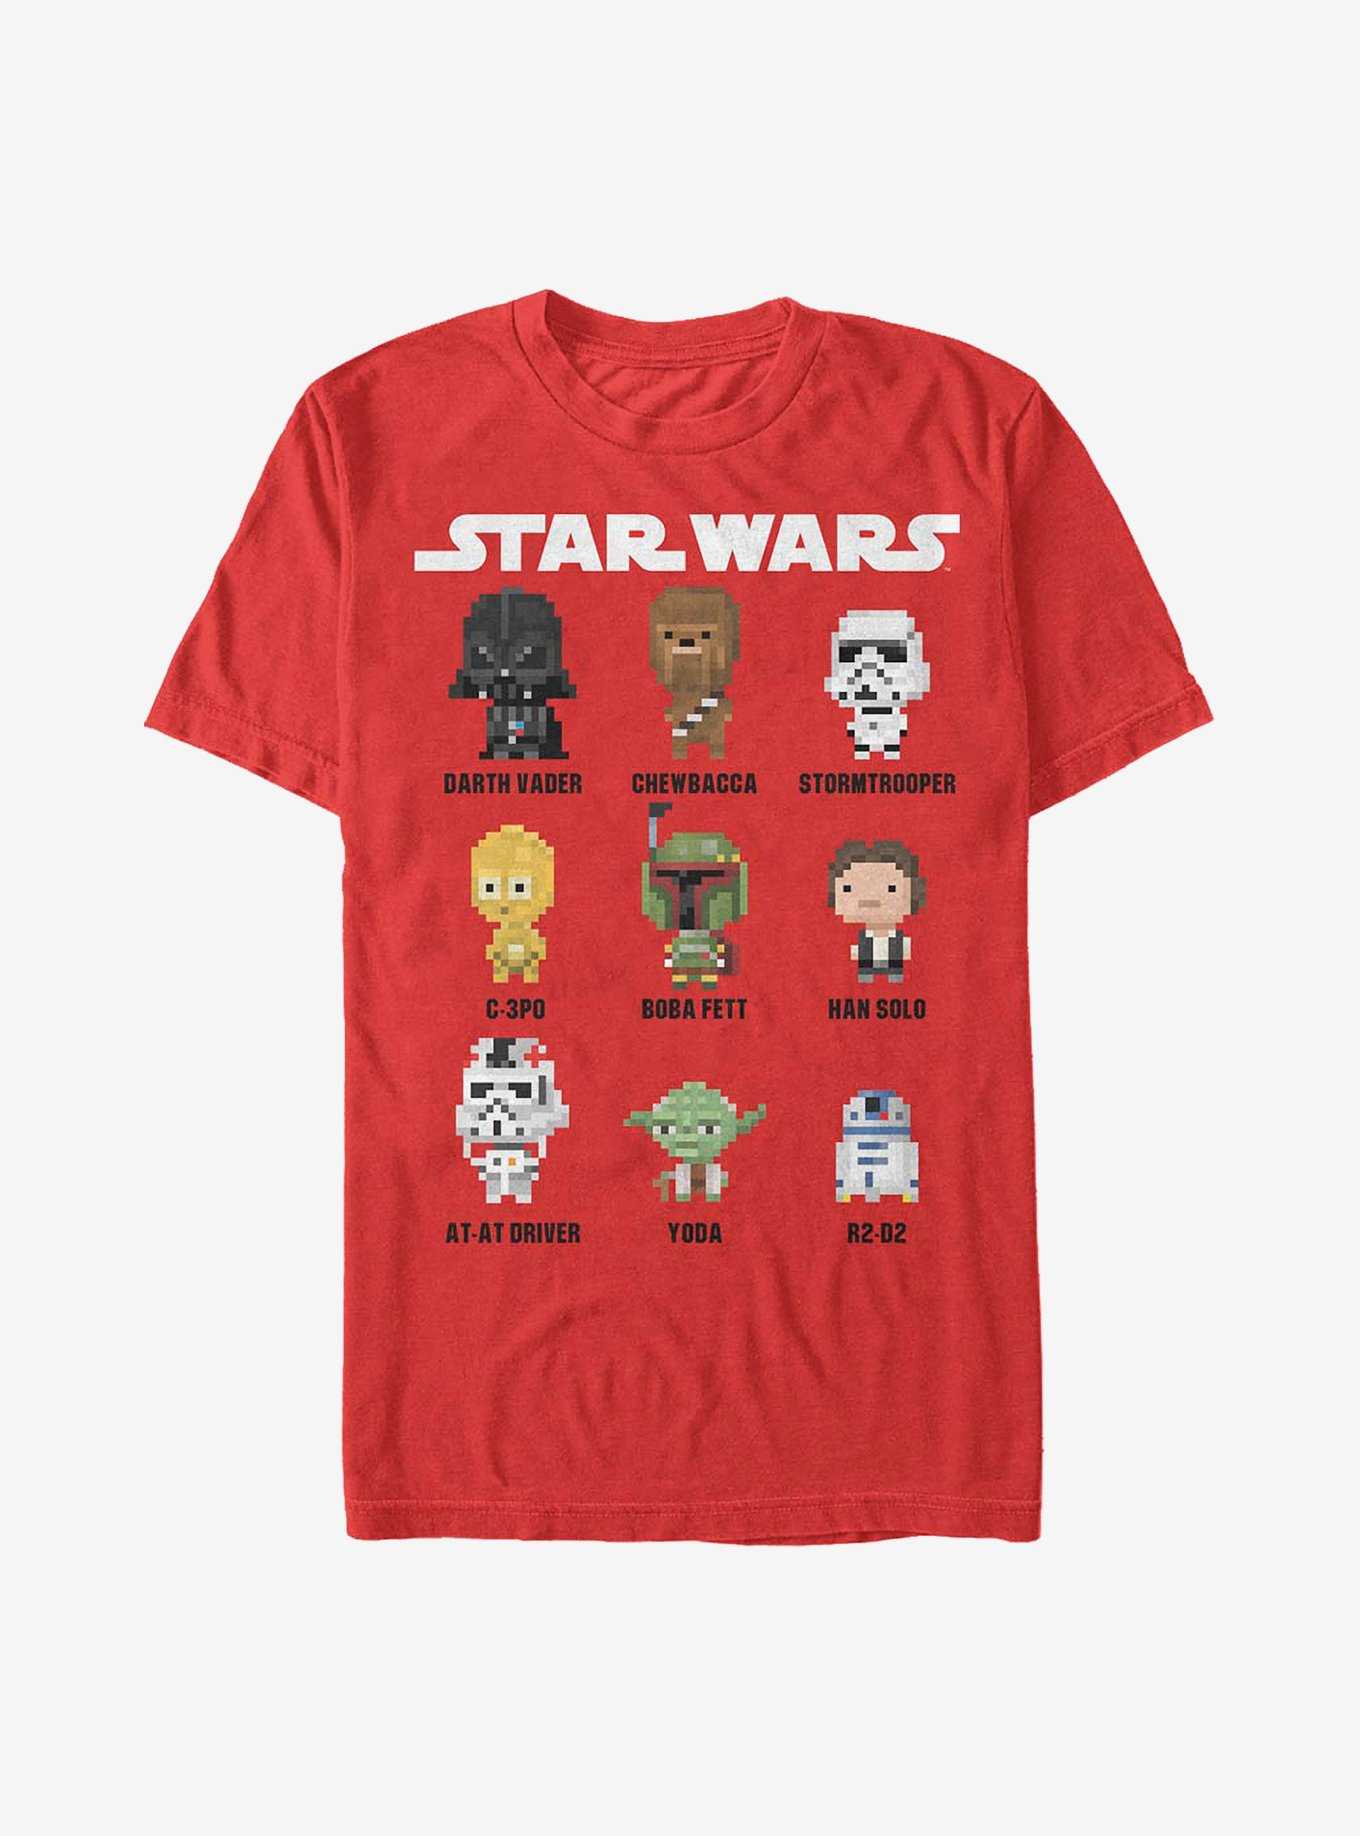 Star Wars Block Characters T-Shirt, , hi-res